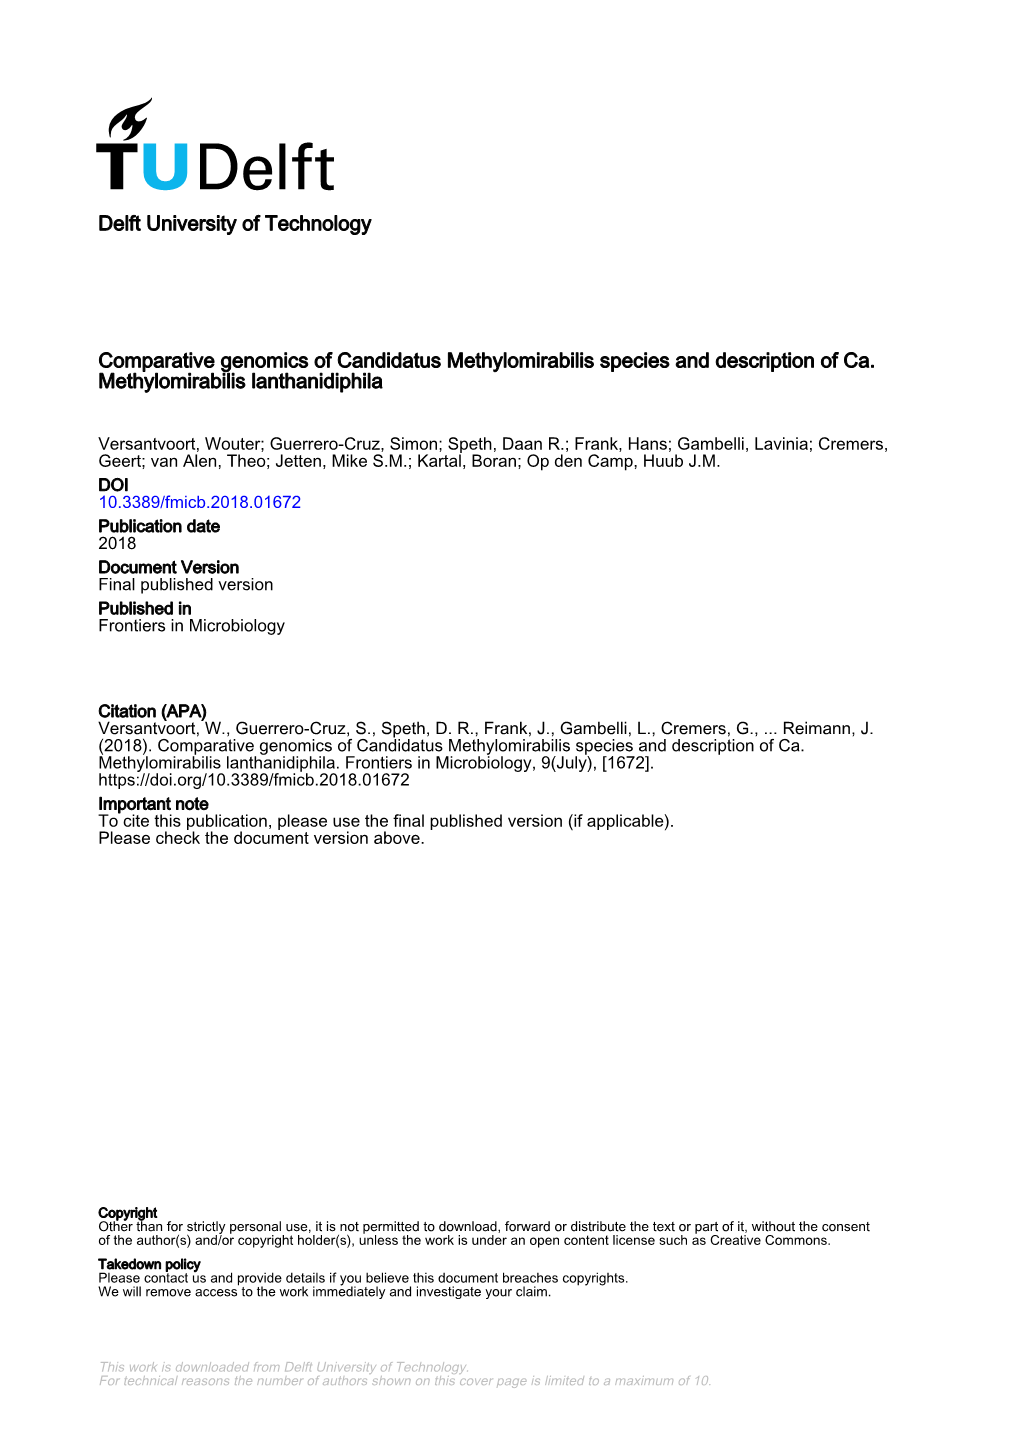 Comparative Genomics of Candidatus Methylomirabilis Species and Description of Ca. Methylomirabilis Lanthanidiphila